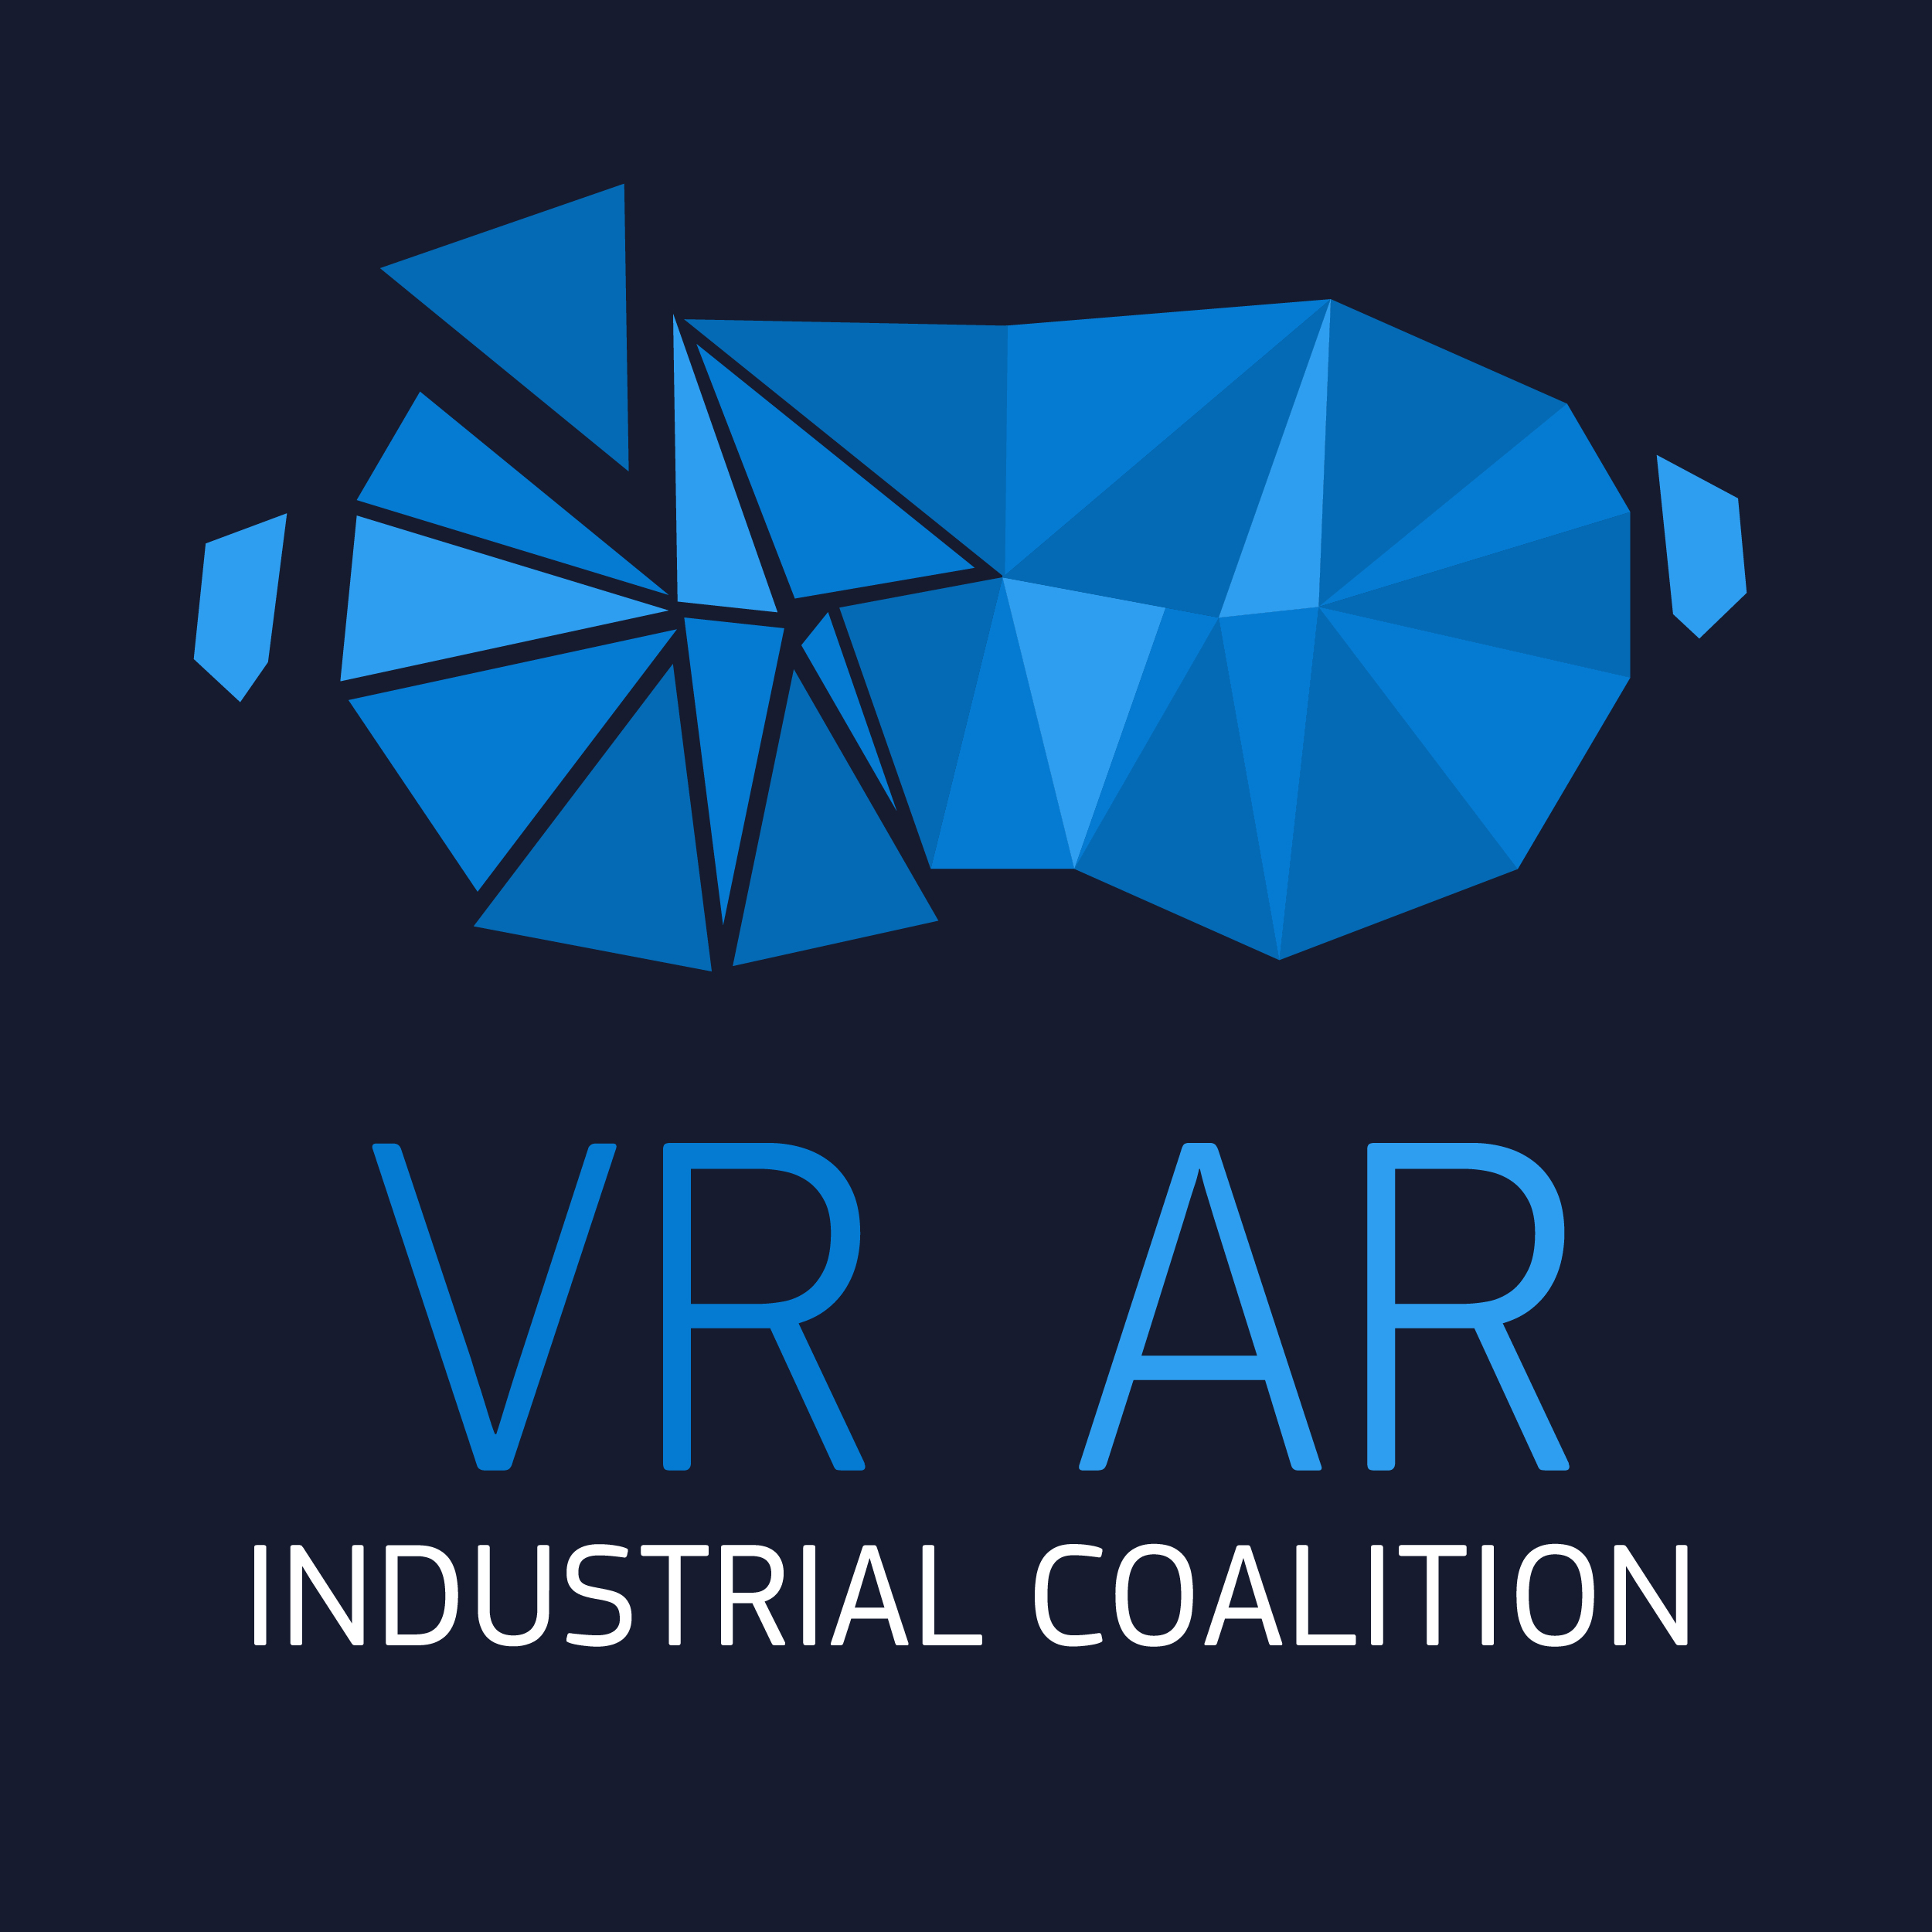 VR/AR INDUSTRIAL COALITION